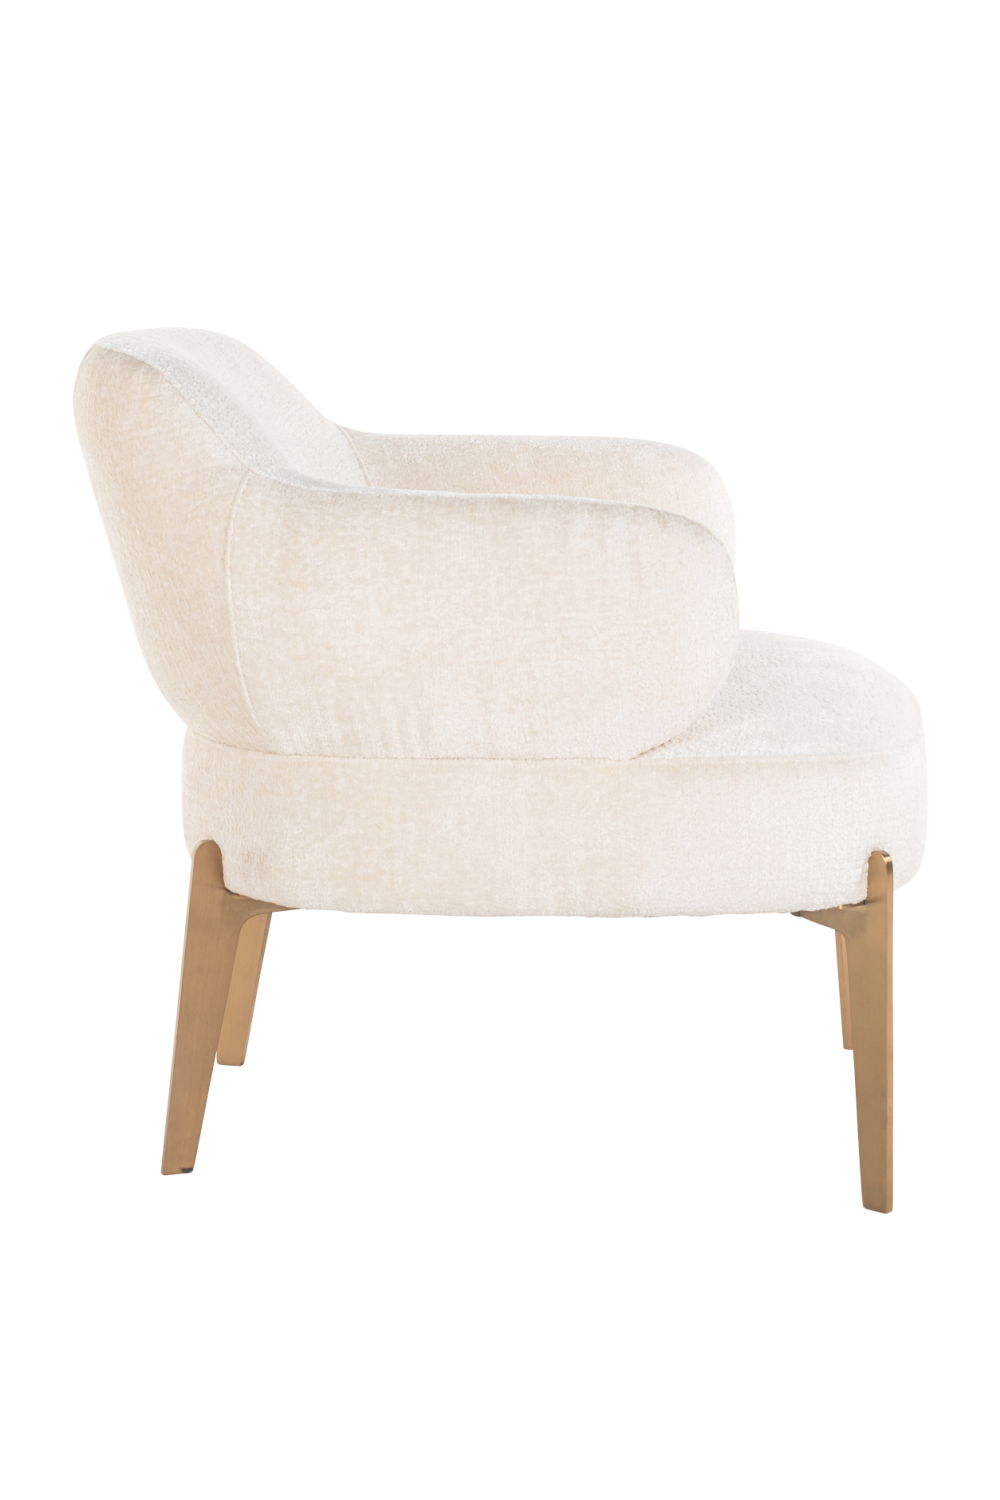 Modern Upholstered Easy Chair | OROA Venus | Oroa.com